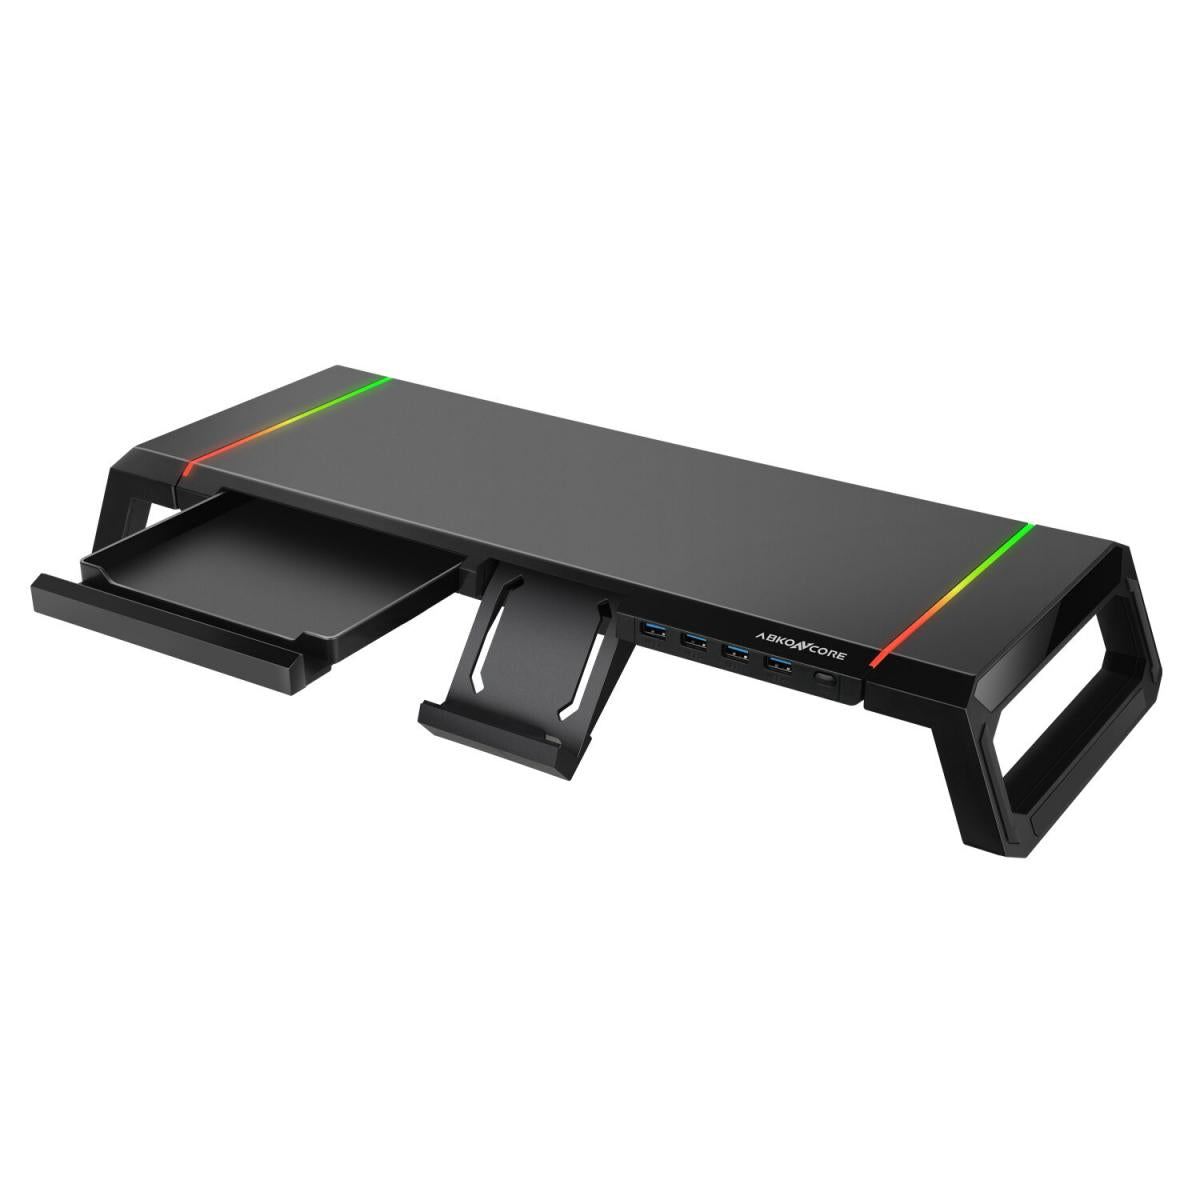 ABKO 韓國 ABKONCORE MES100 (黑色) Monitor Stand,RGB Lighting, Folding Design, USB3.0 x4 Hubs, Phone Cradle